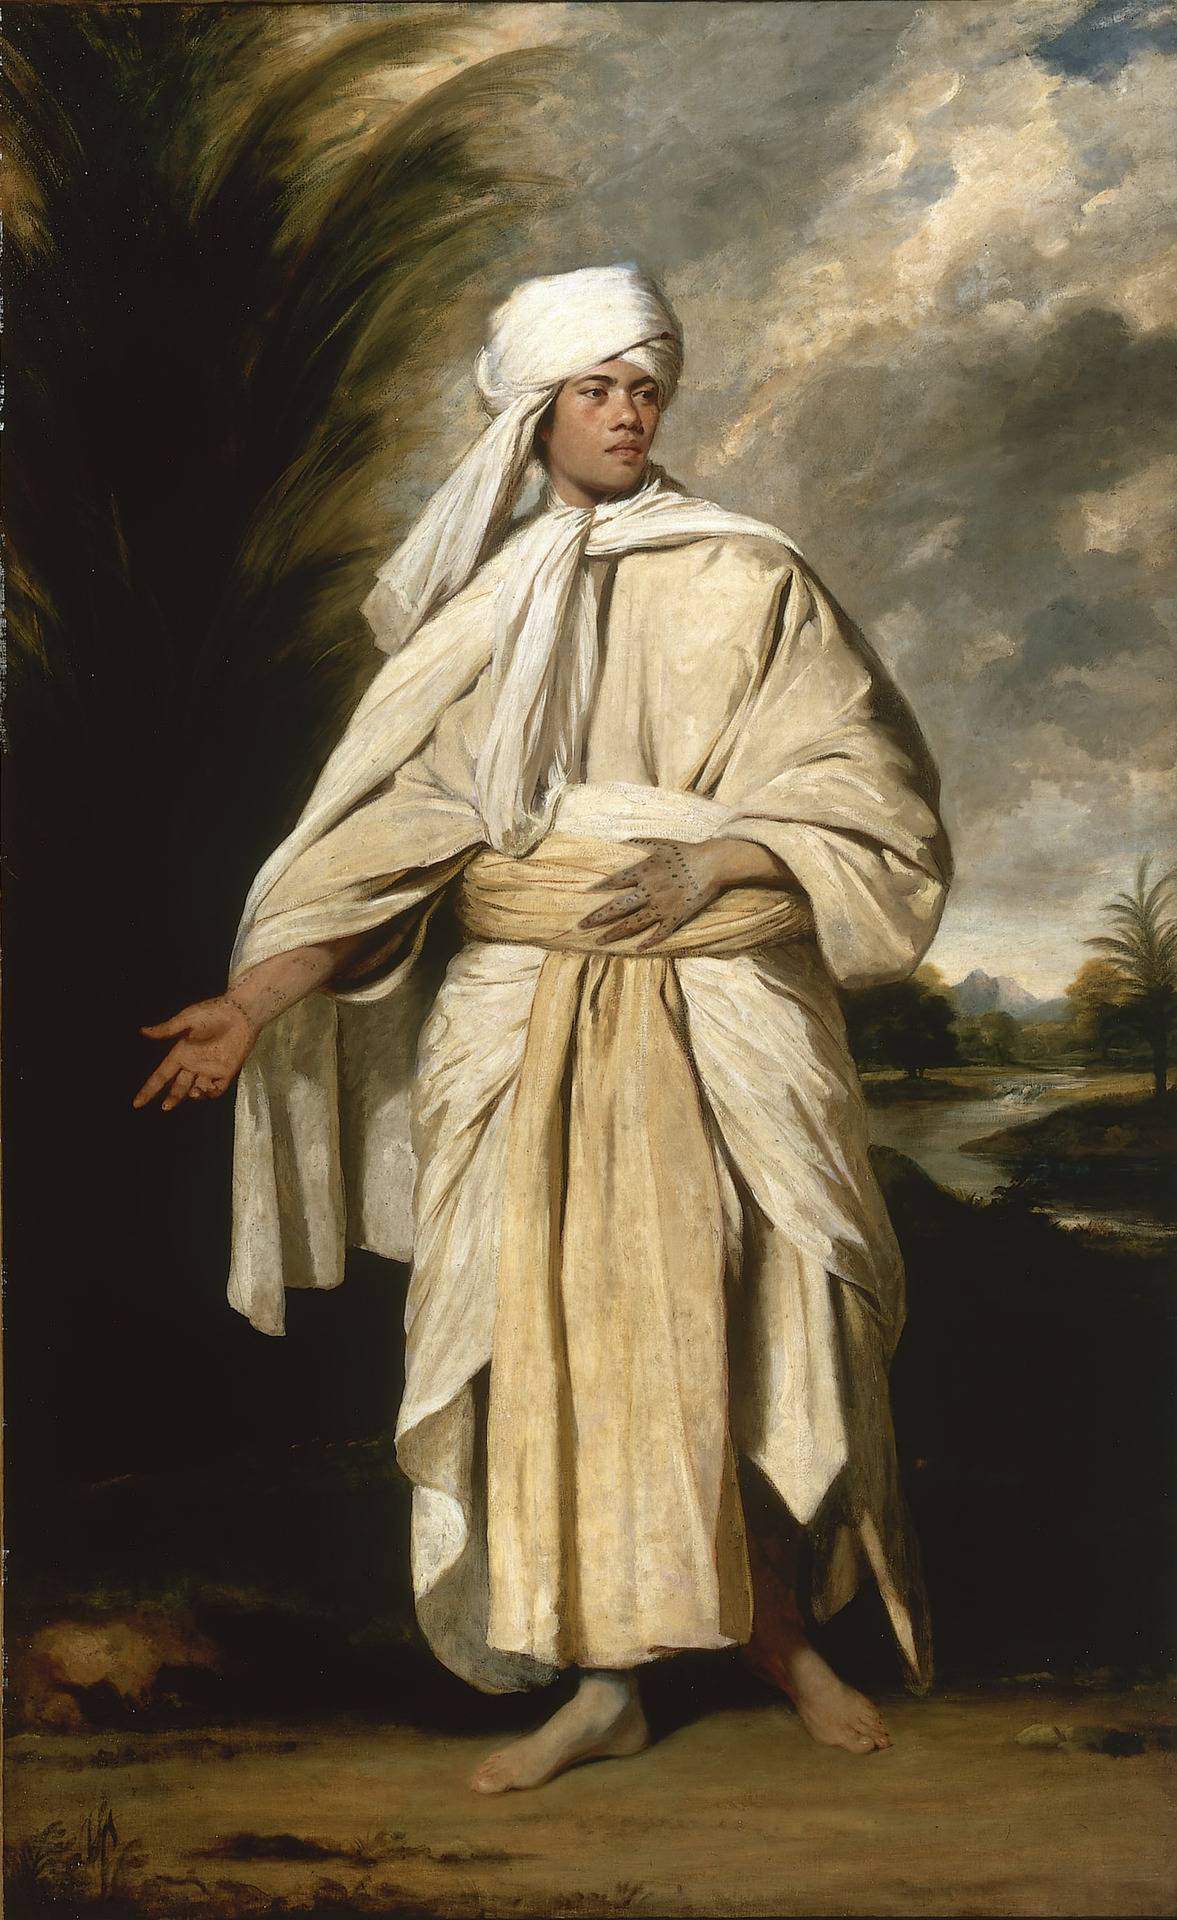 Joshua Reynolds (1776)